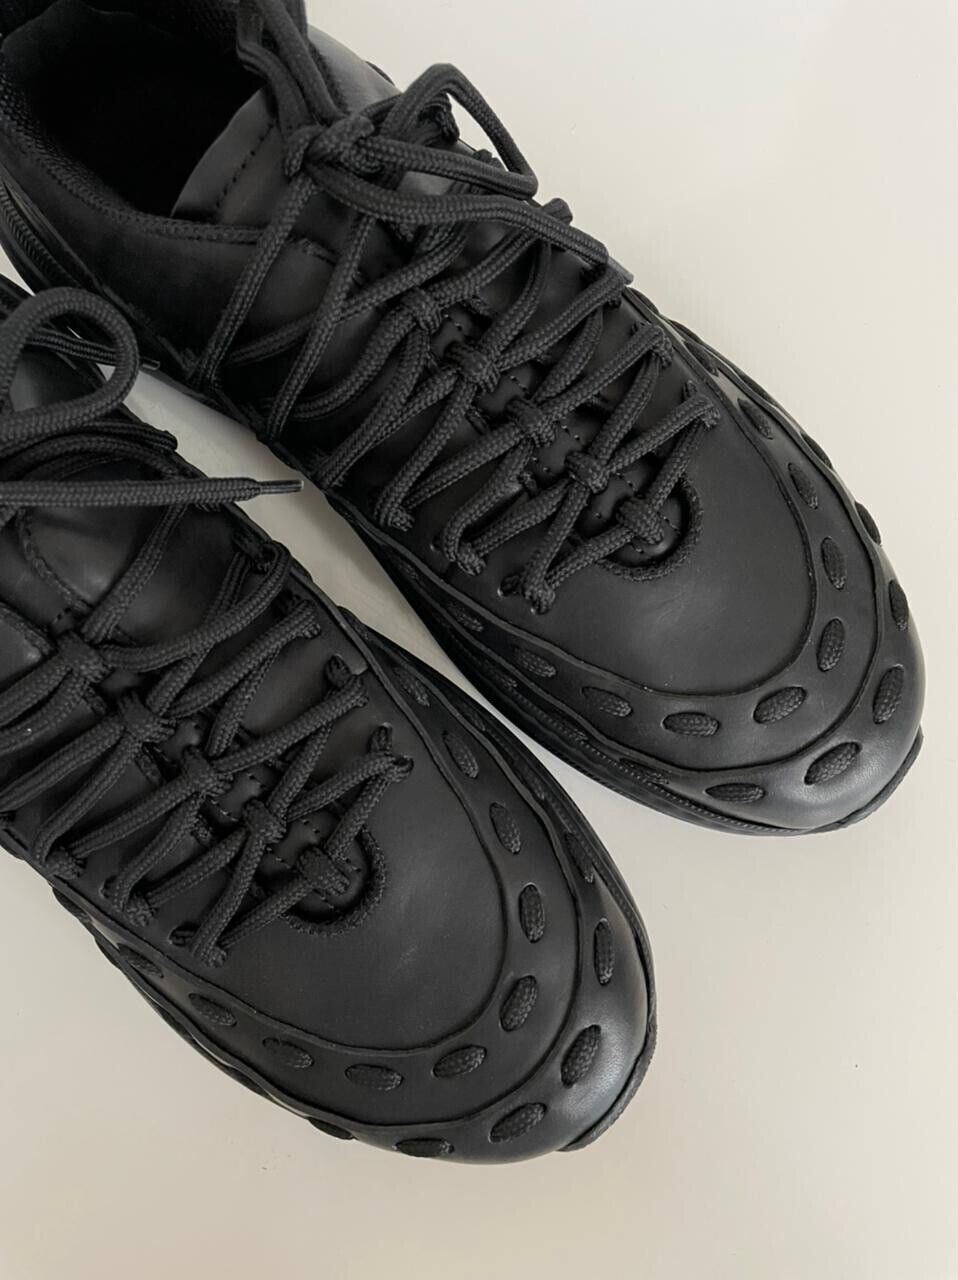 NIB $950 Bottega Veneta Mens Leather Black Sneakers 7.5 US (40.5) 578305 1000